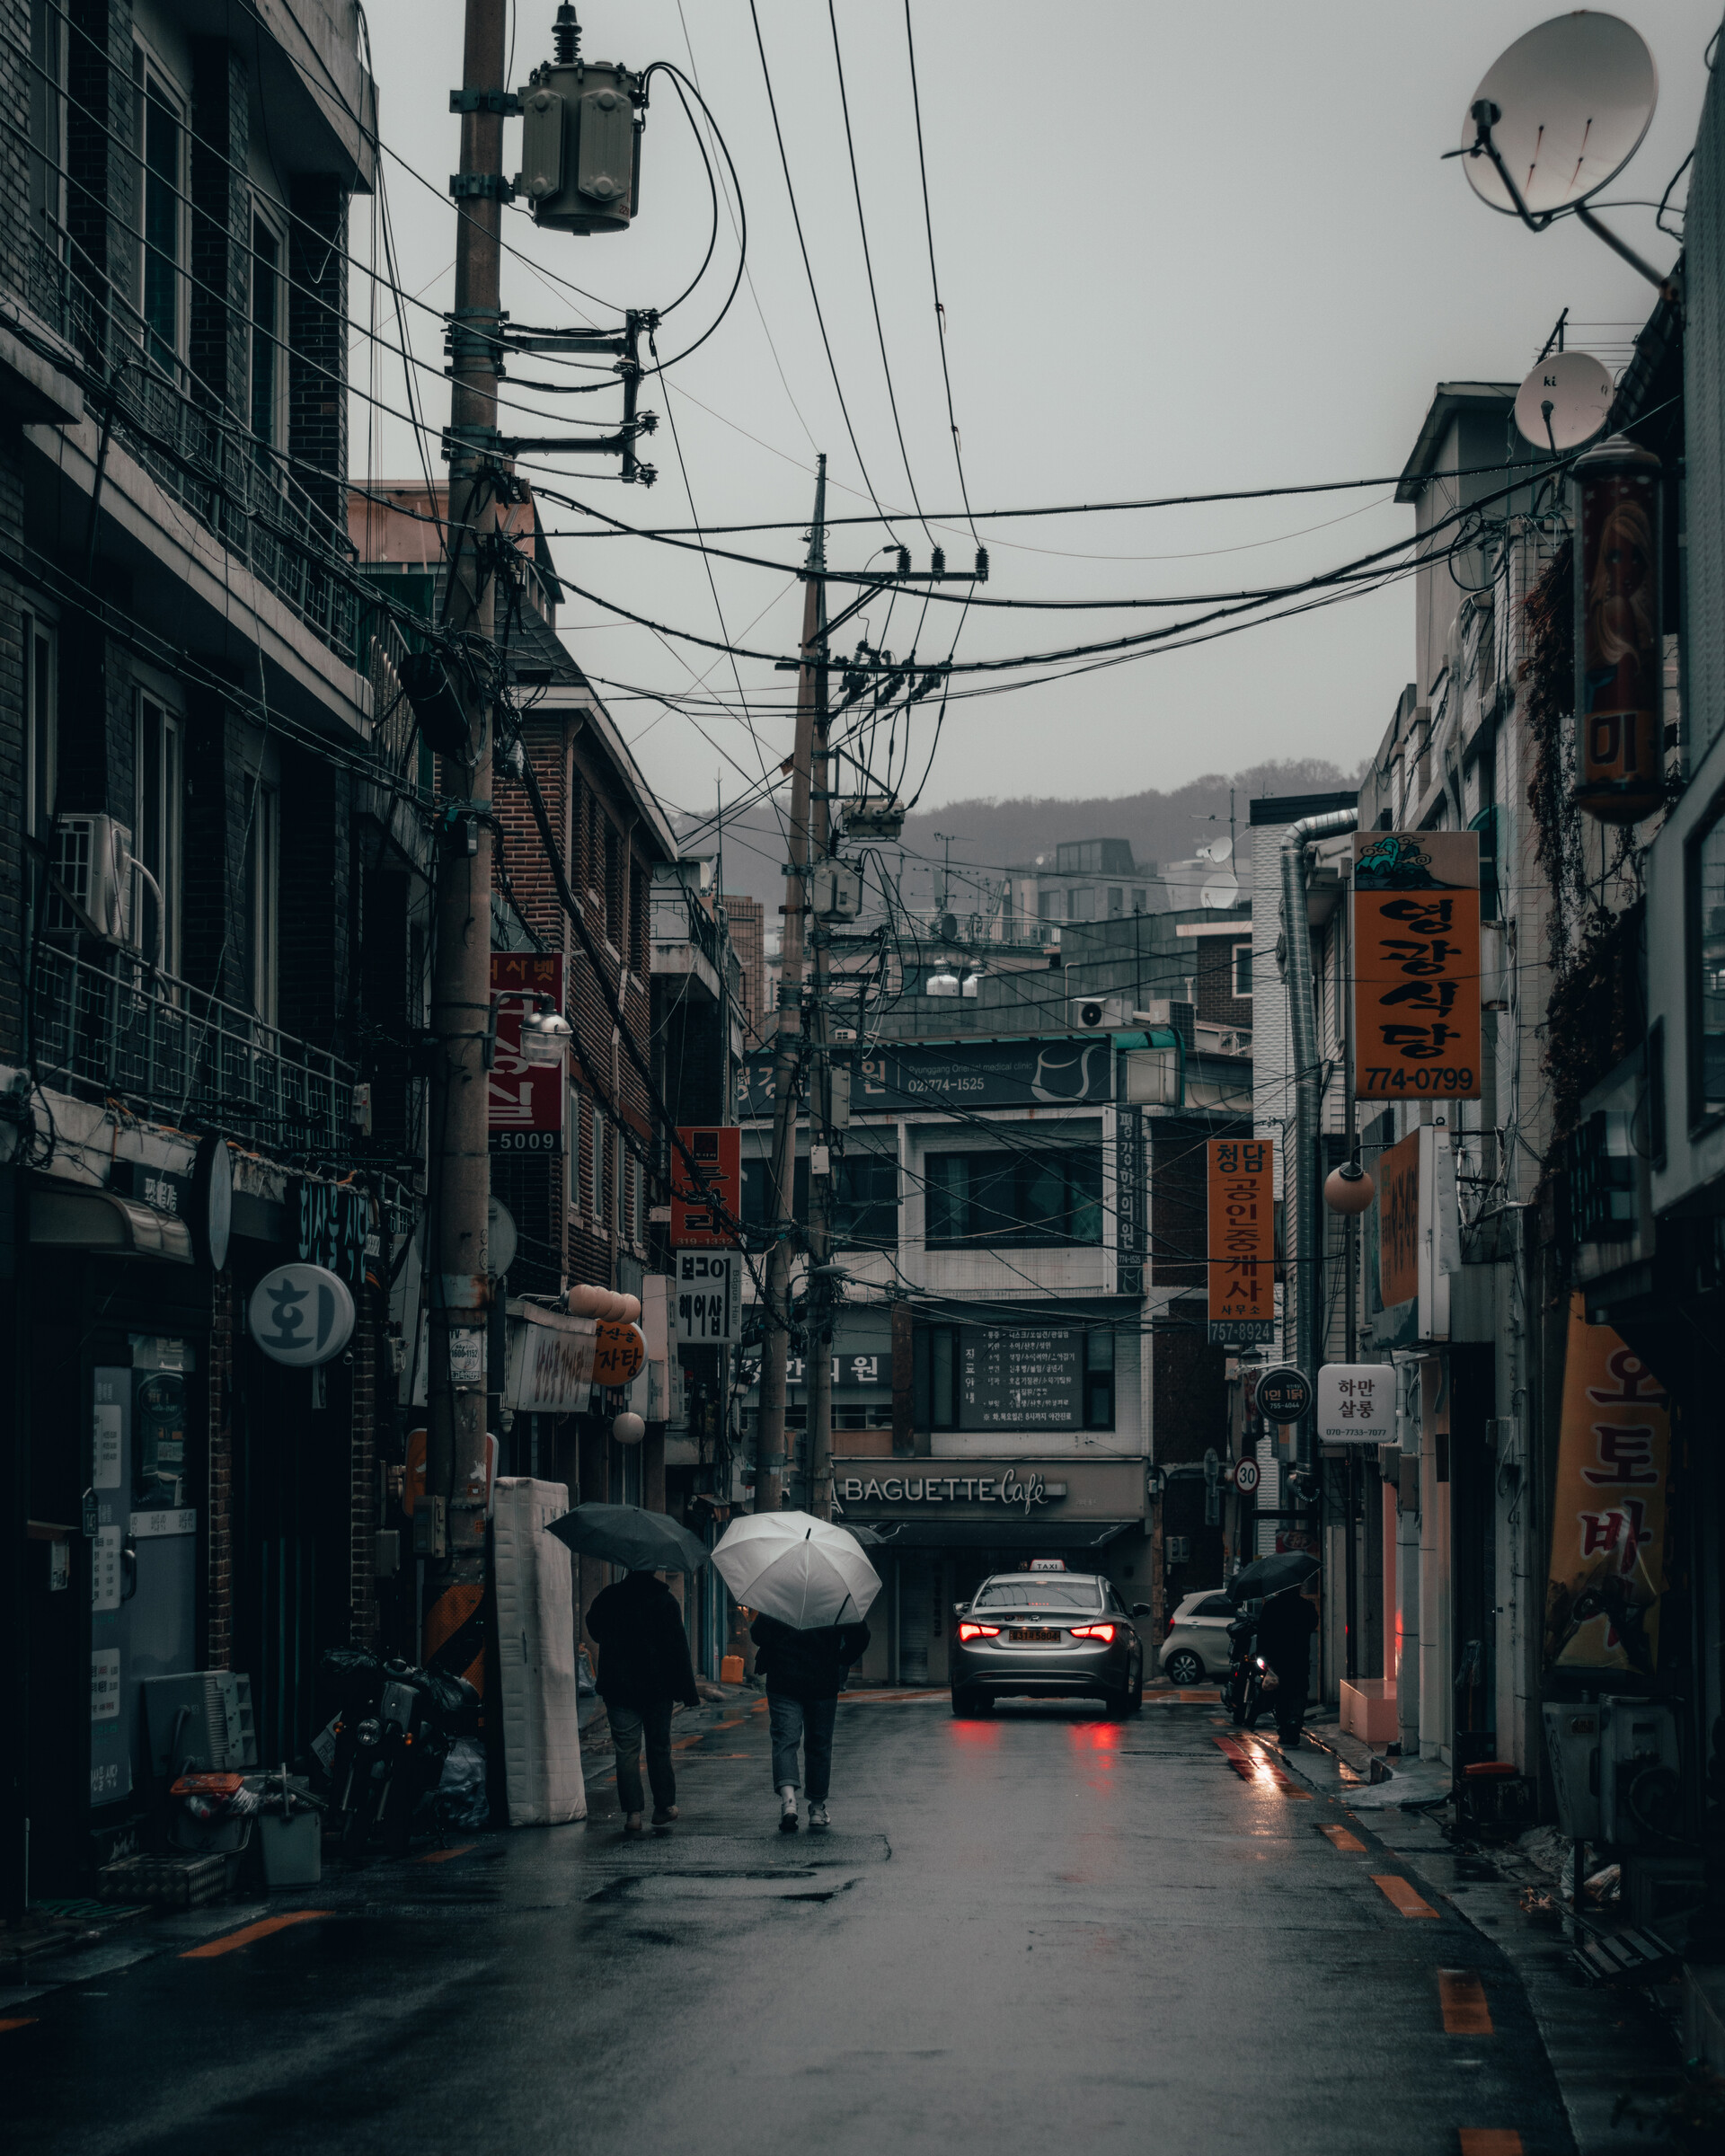 A gloomy day in Haebangchon